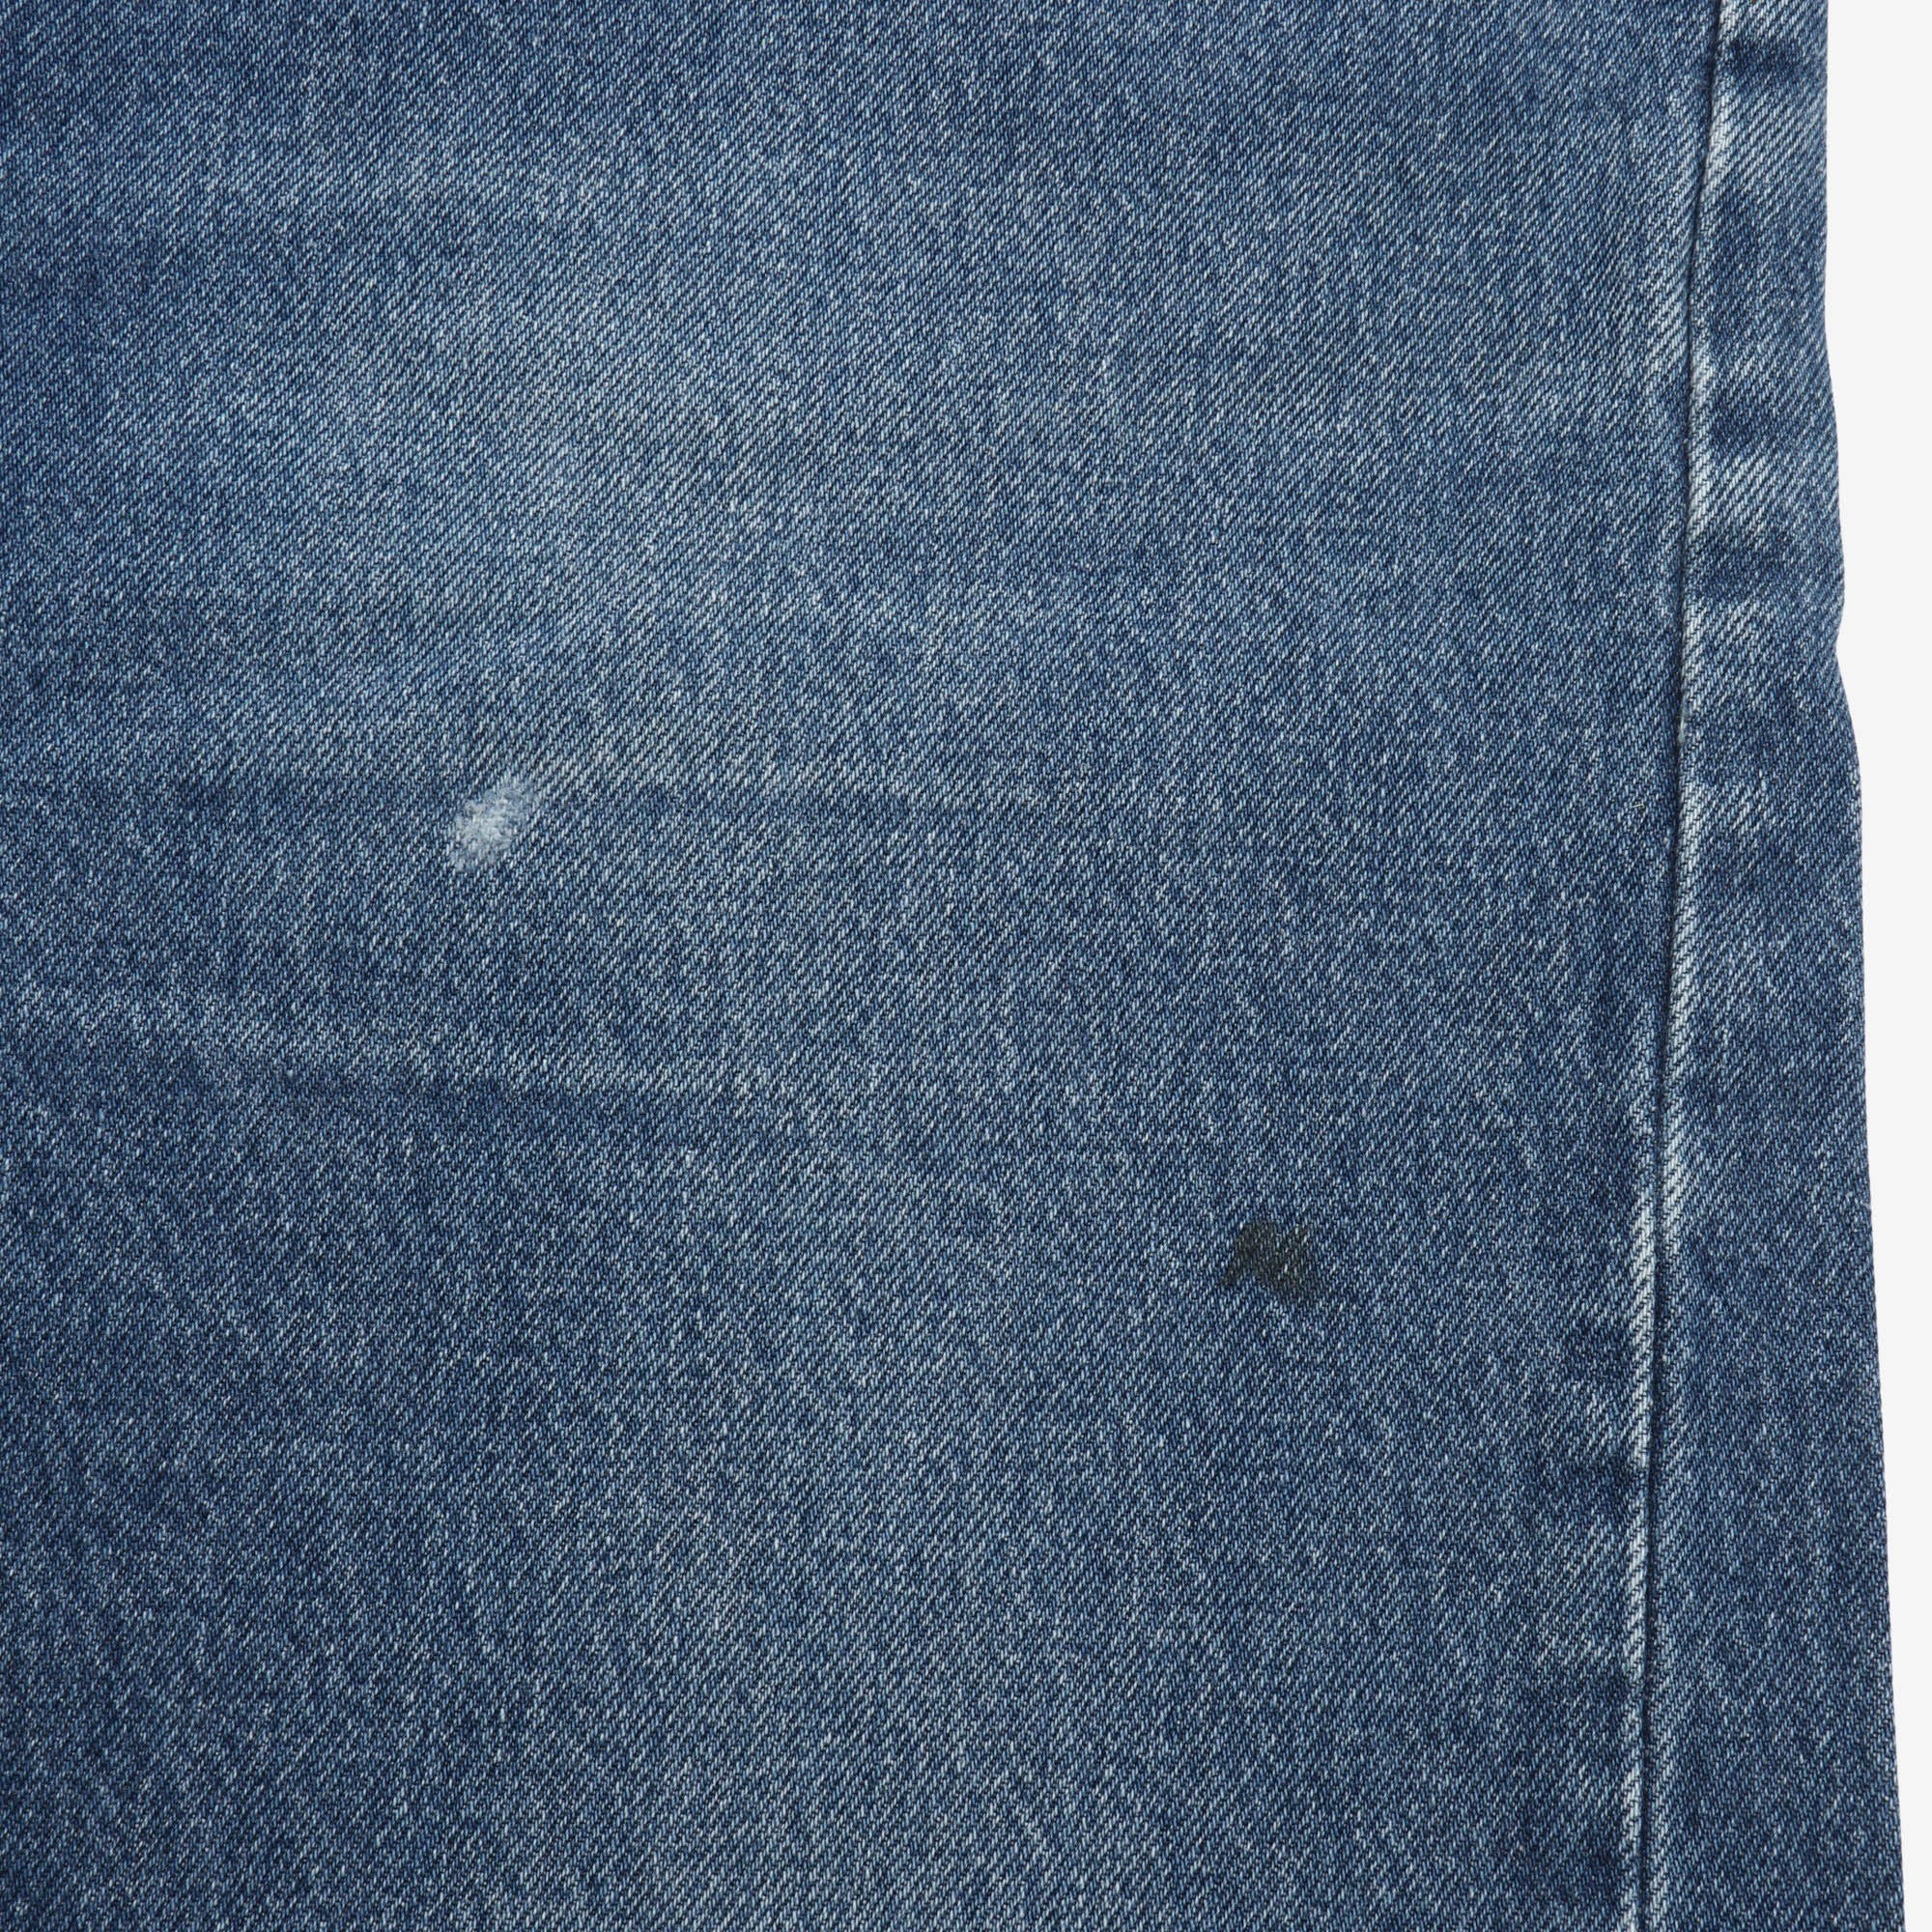 501 Jeans(USA Made)